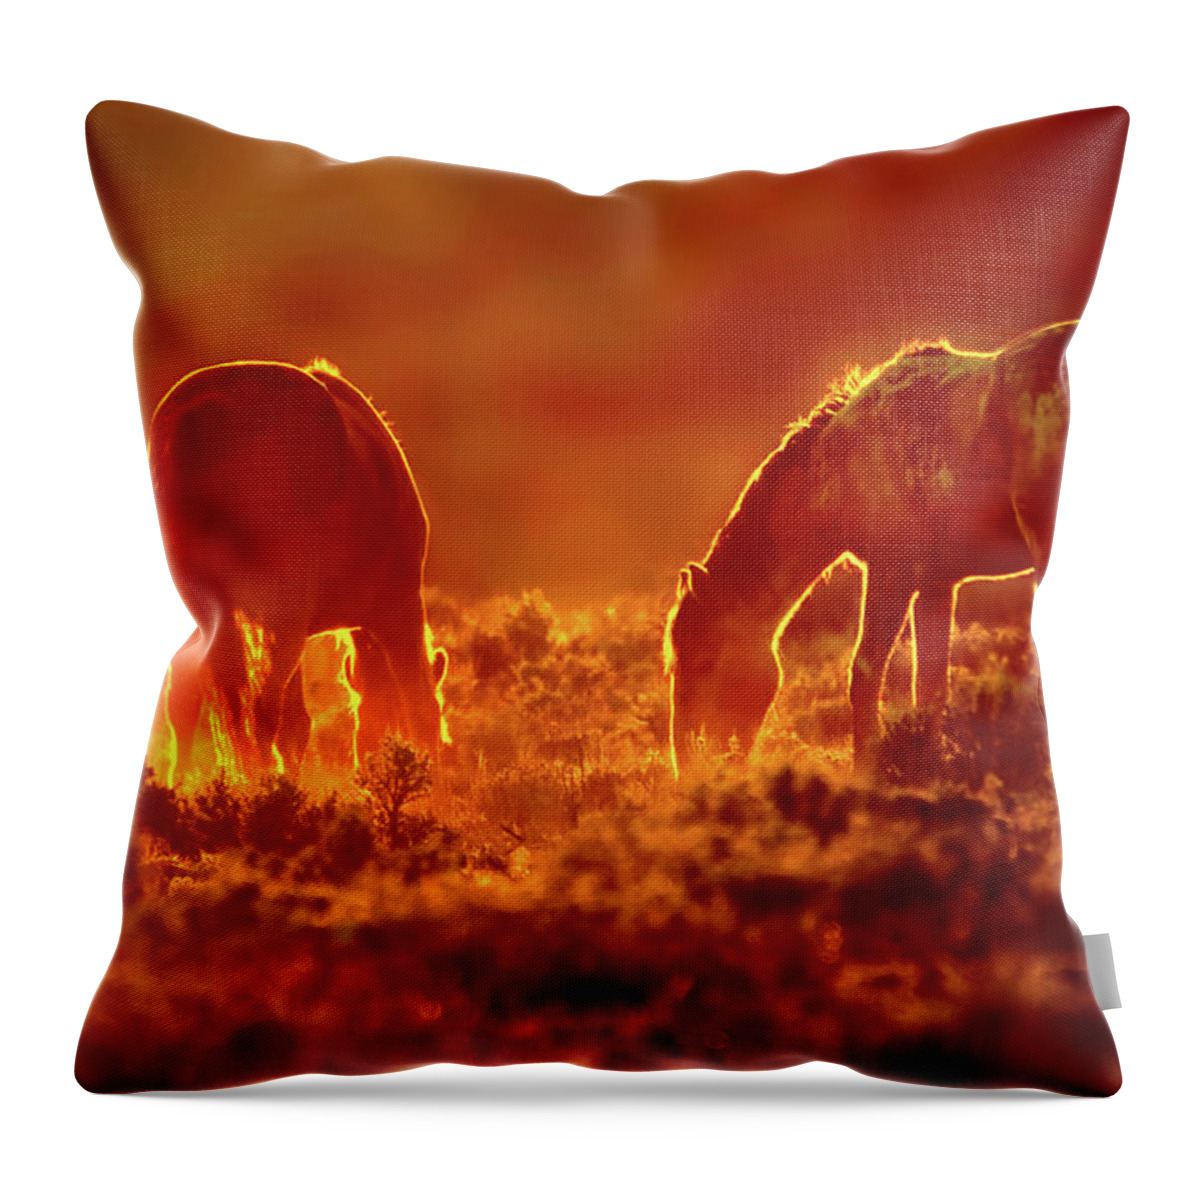 Horses Throw Pillow featuring the photograph Good Night, Beautiful Mustangs by Judi Dressler